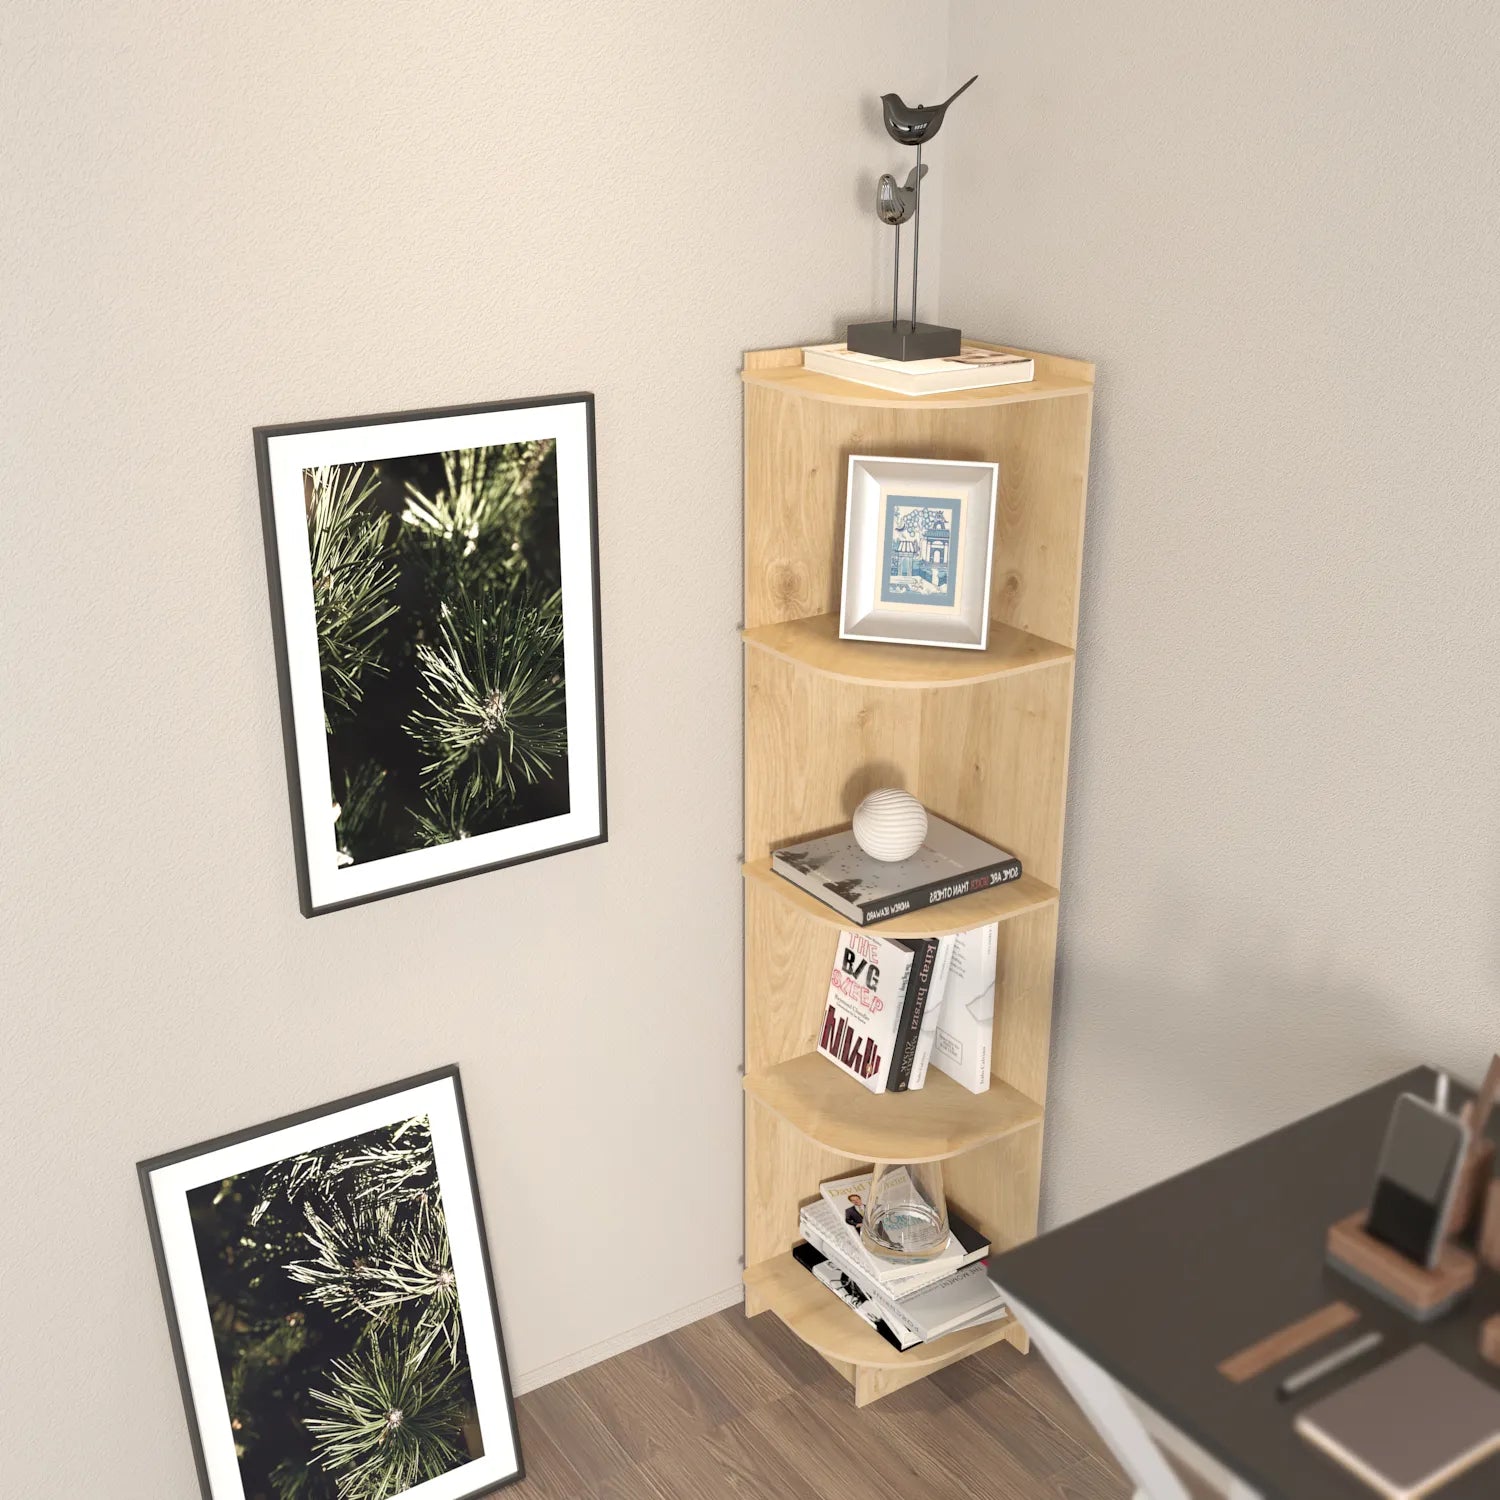 Liva 54" Tall MDF Corner Bookcase | Bookshelf | Display Unit